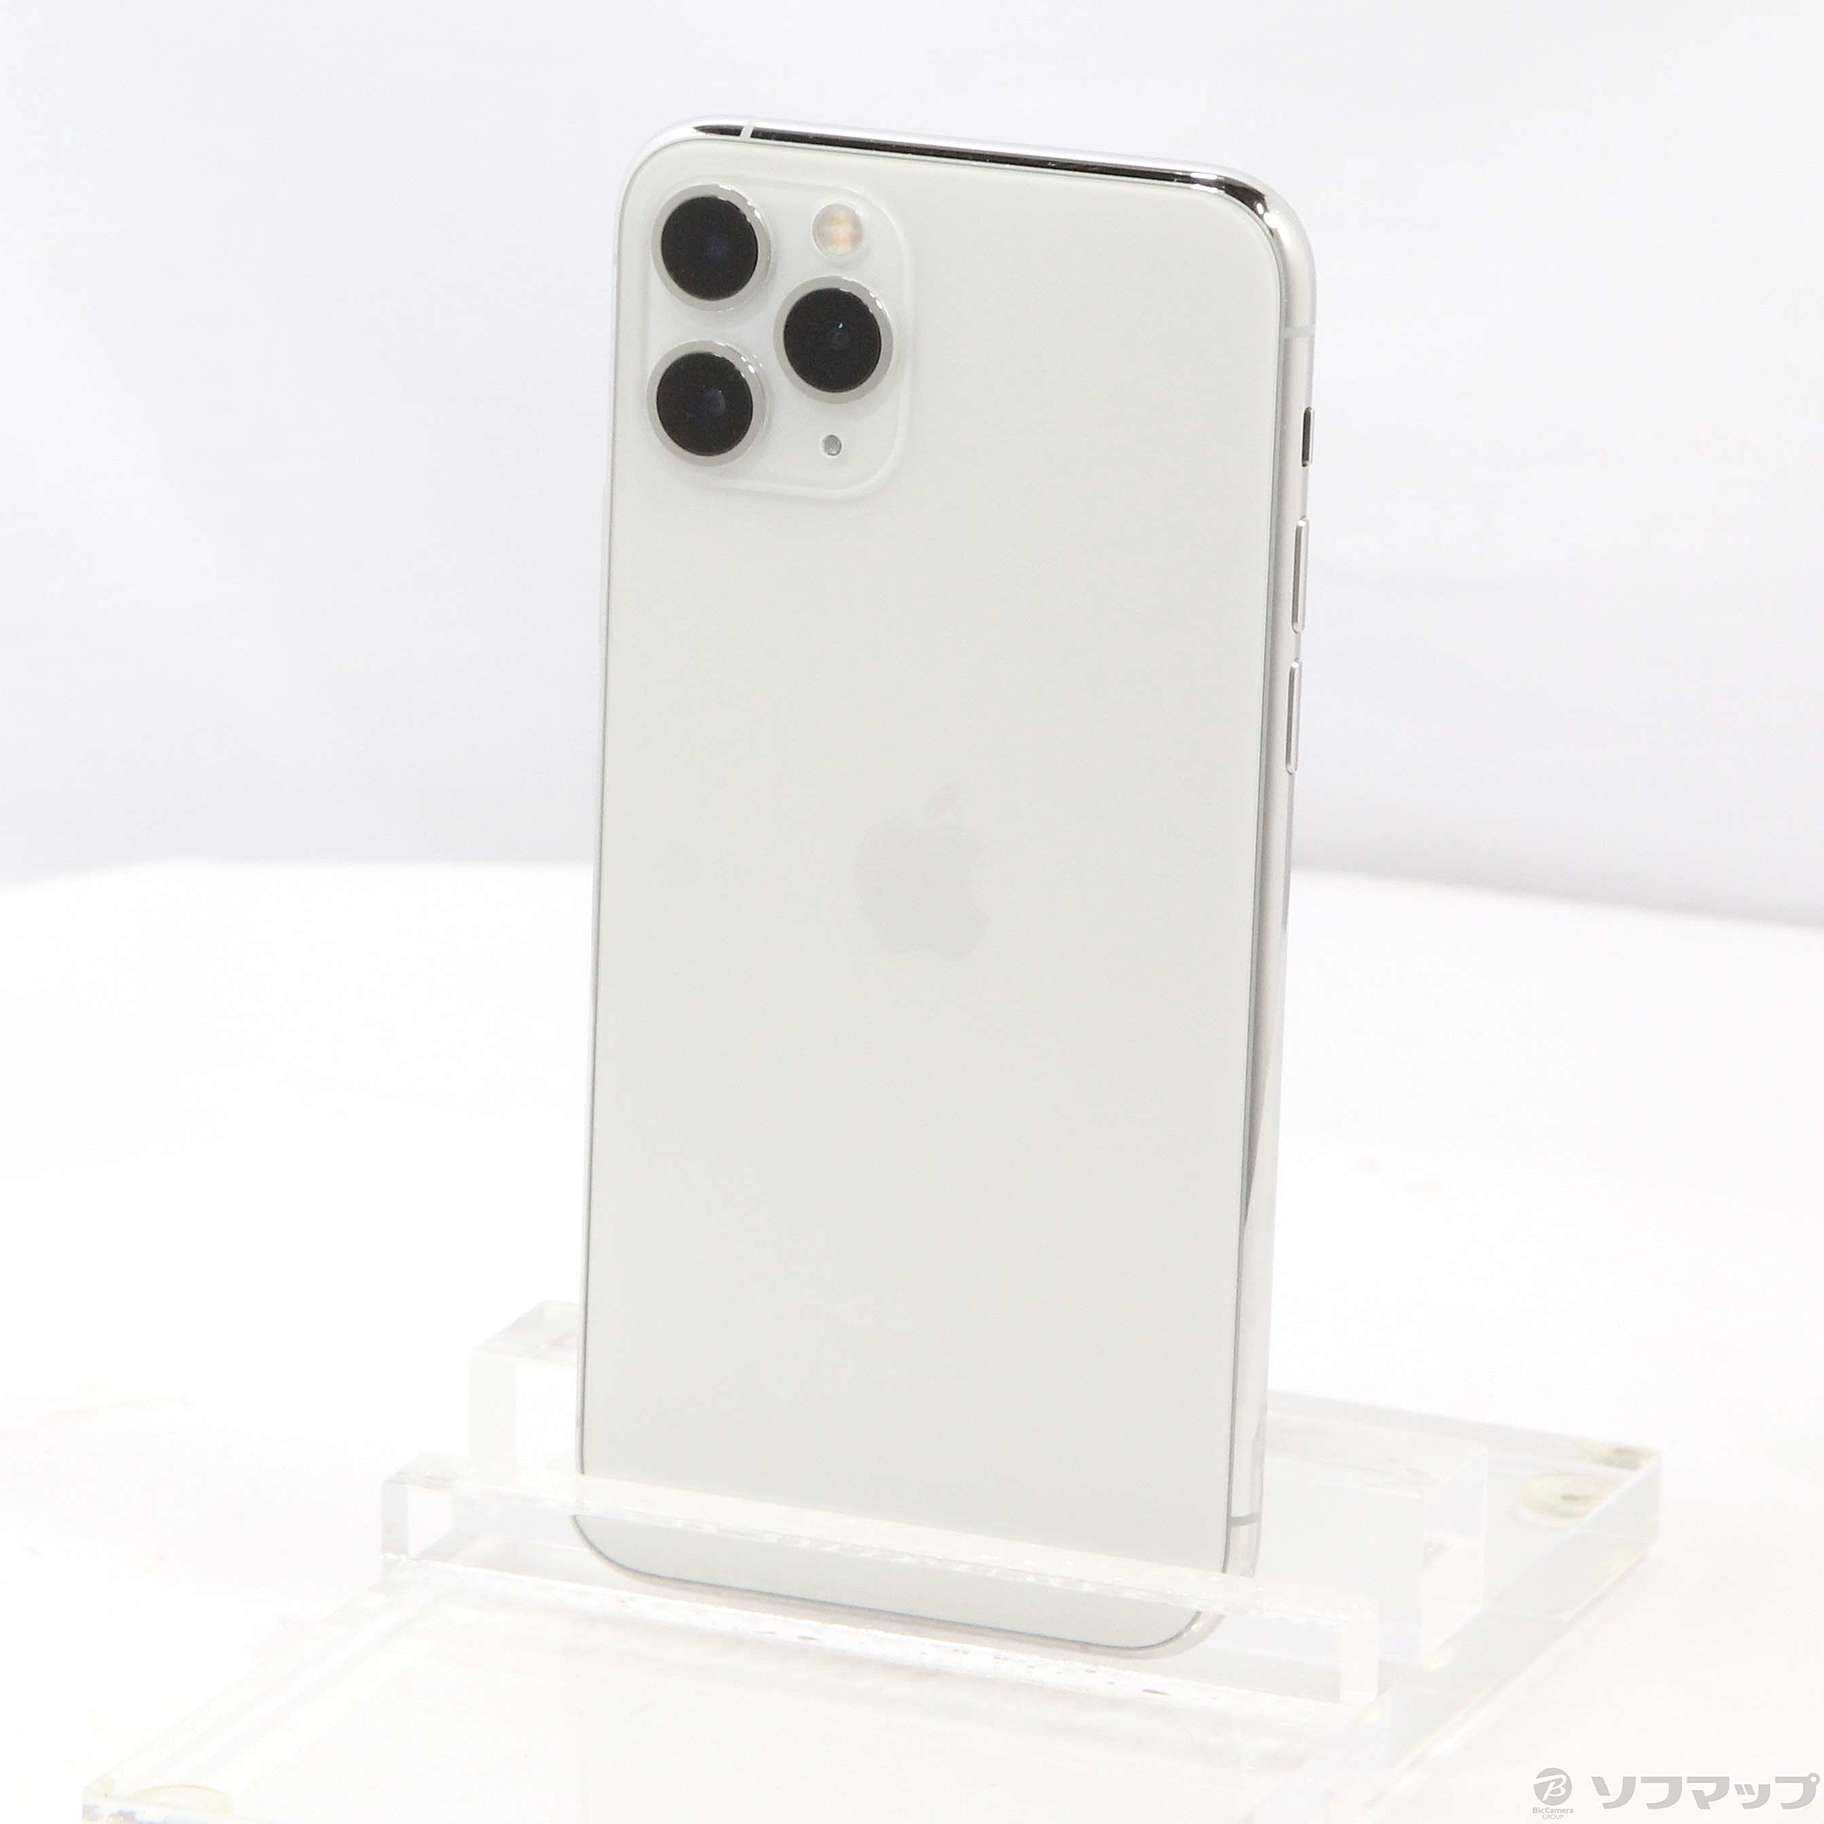 iPhone11 Pro 256GB White